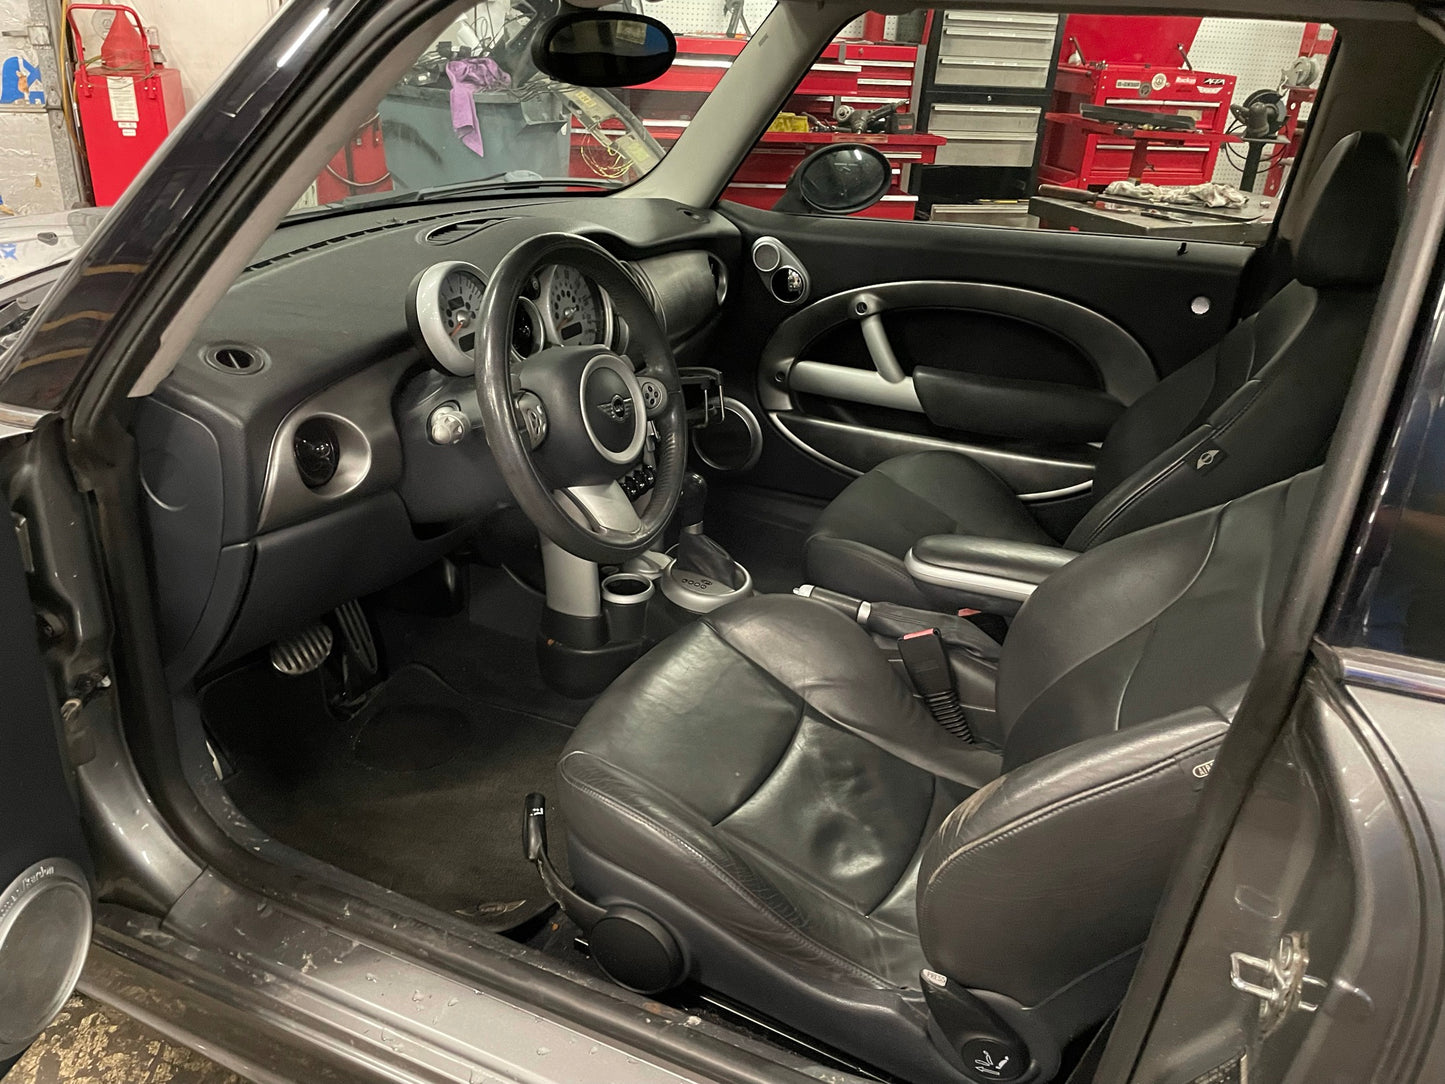 2006 MINI Cooper Hatchback S, New Parts Car (October 2021) Stk # 261